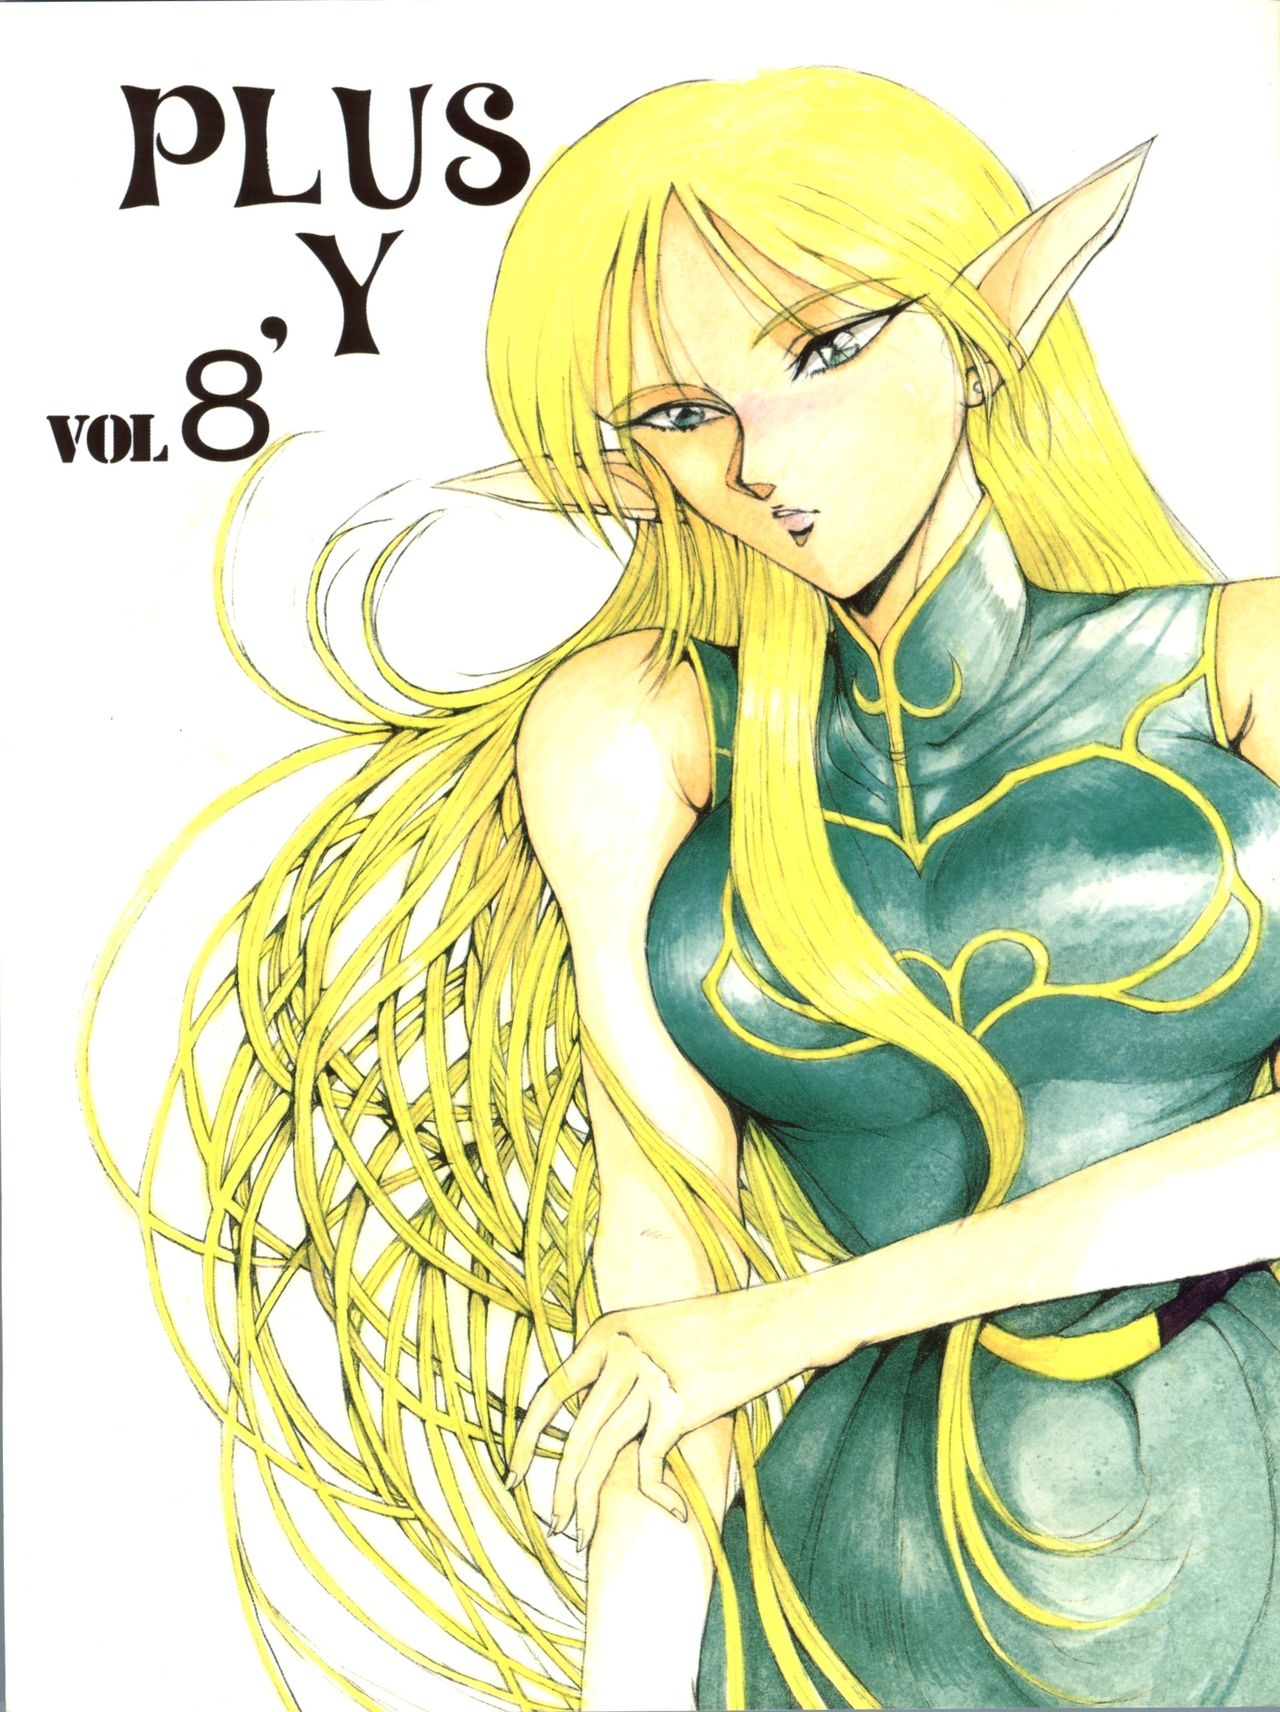 [Team Plus-Y (Takanabe Chitose, Haniwa Pao)] PLUS-Y Vol.8 (Ah! My Goddess, Zettai Muteki Raijin-Oh) 1